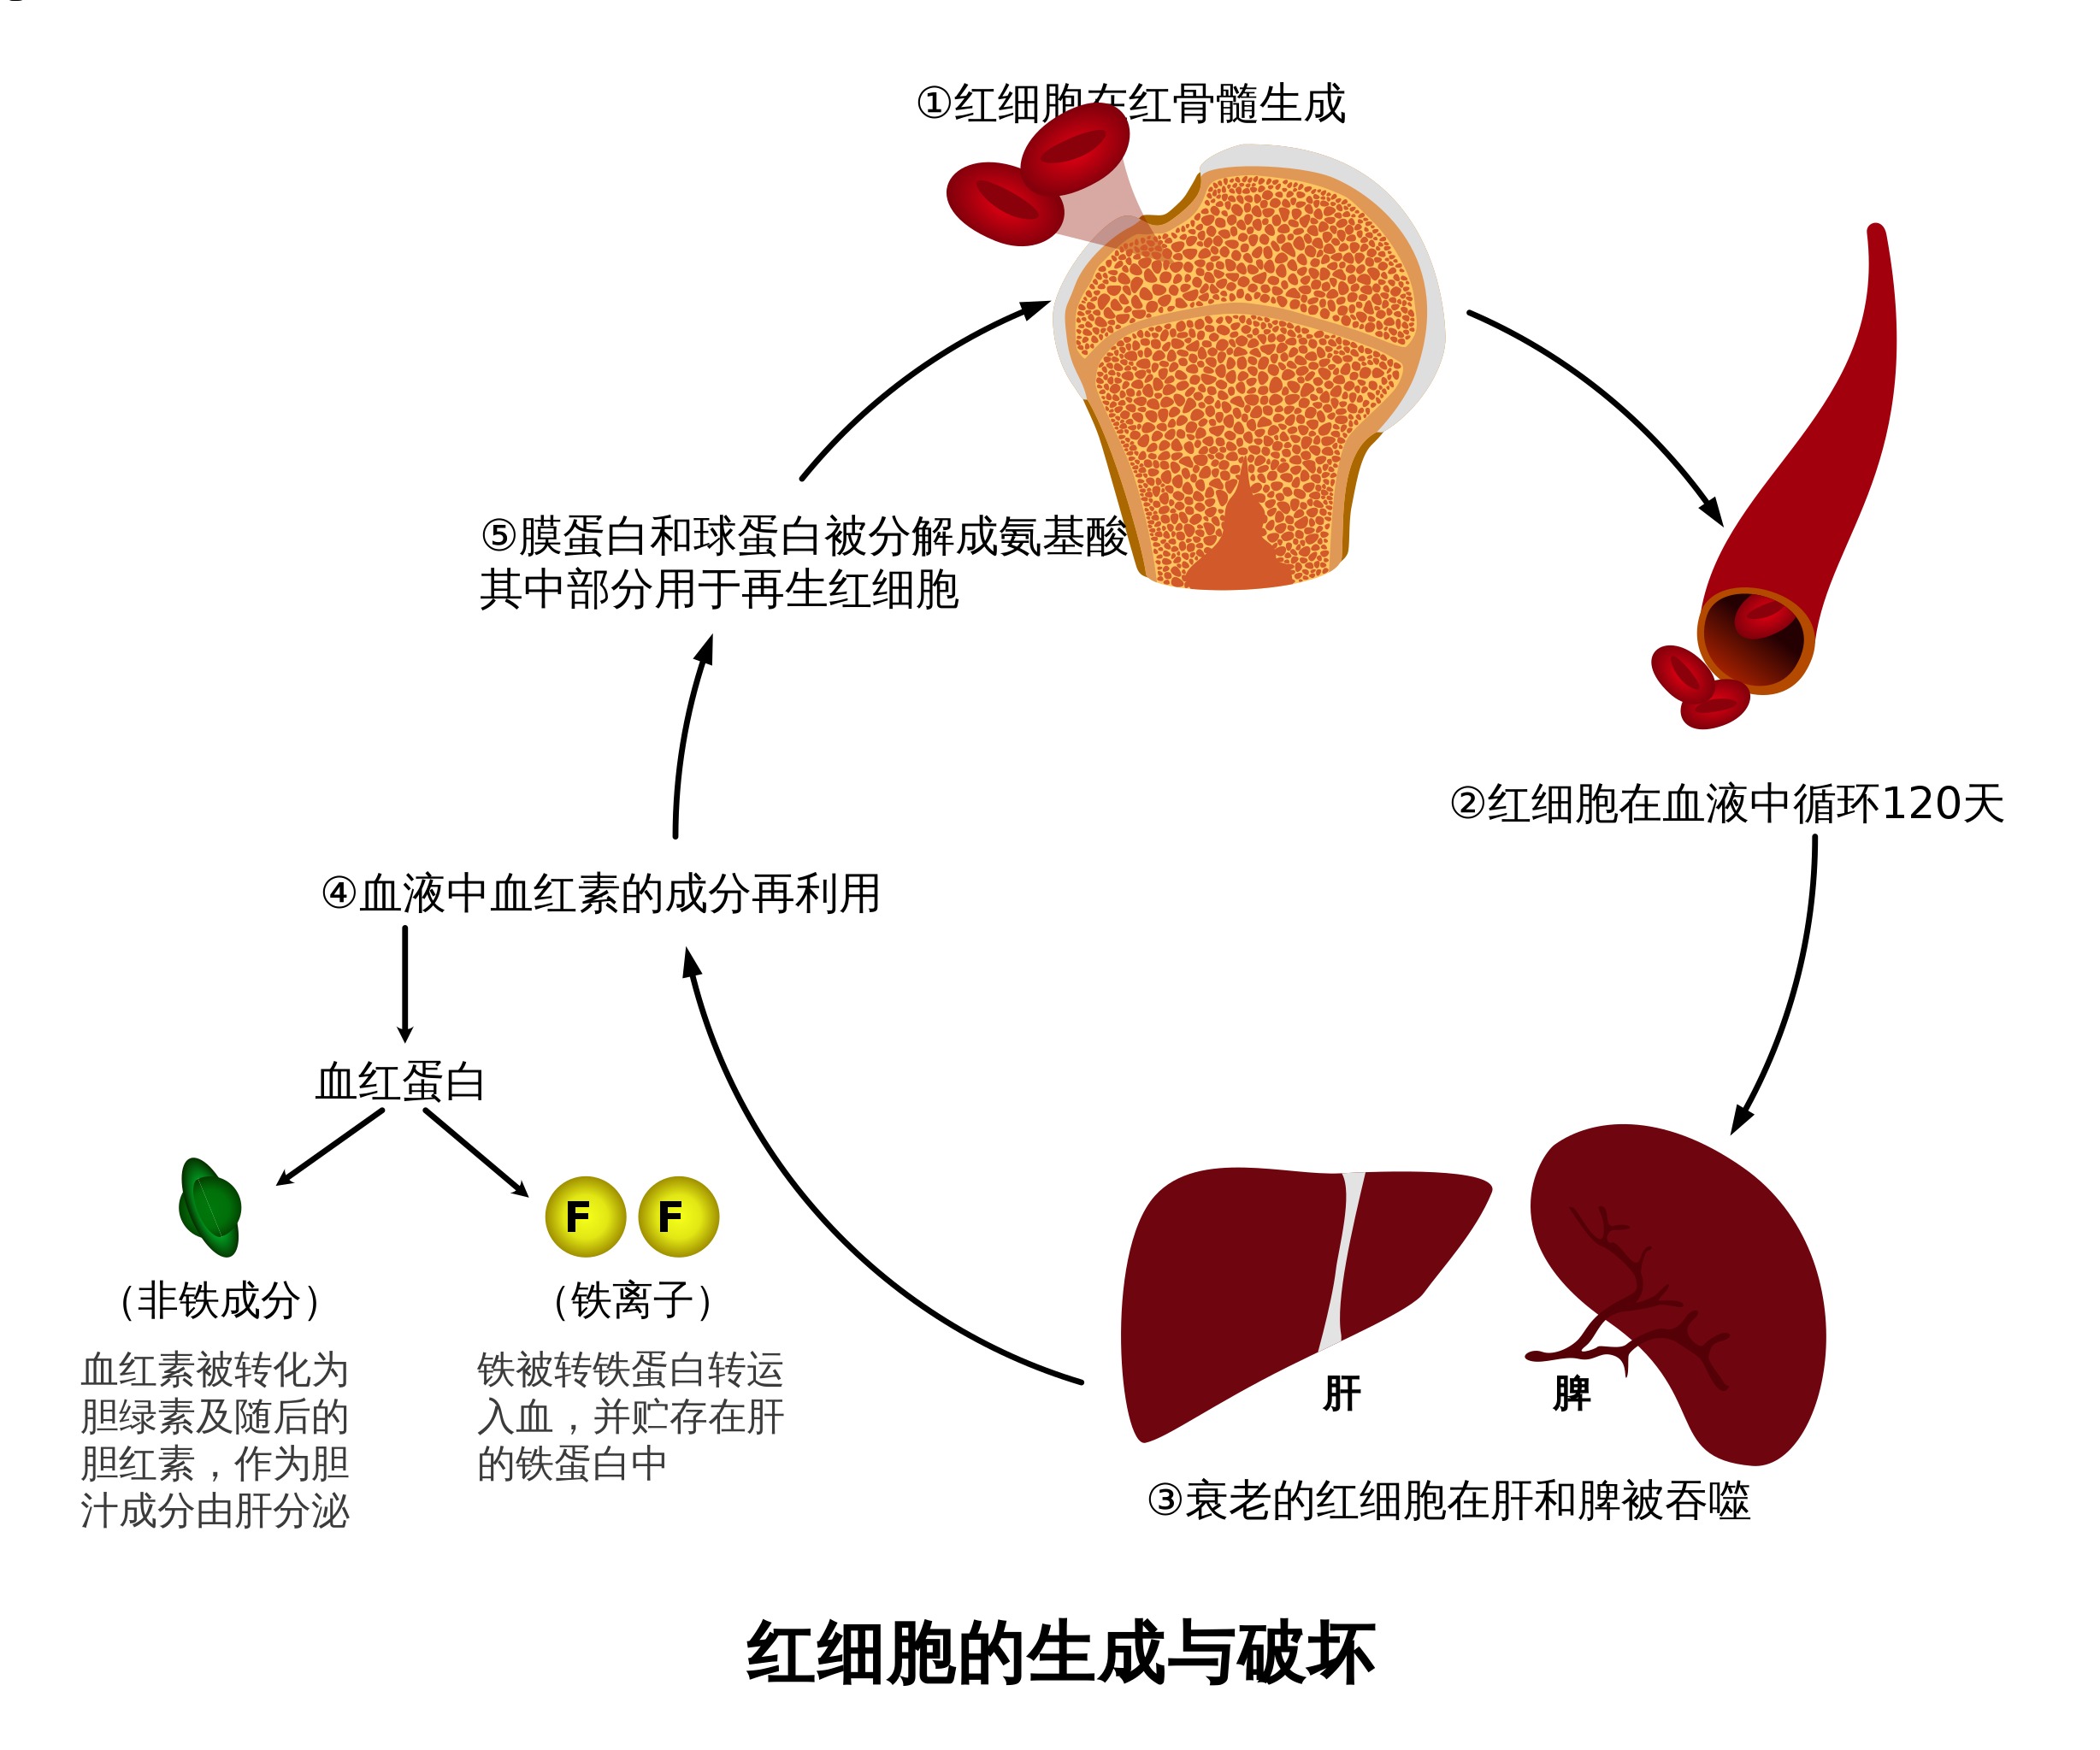 Formation process diagram